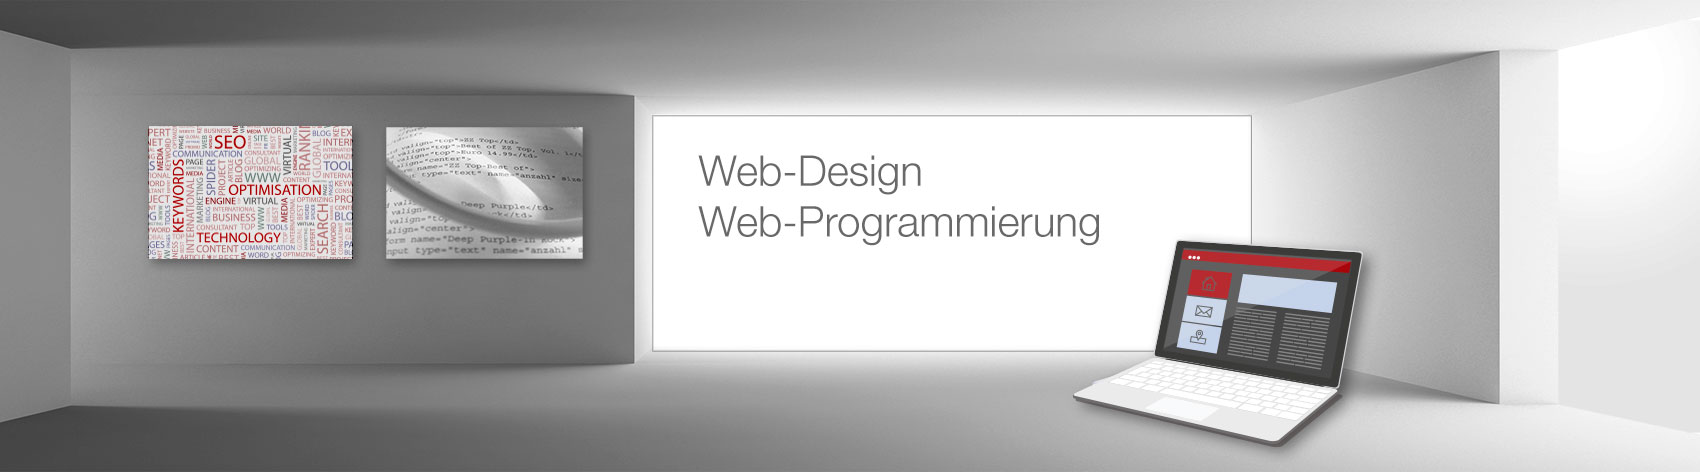 Web-Design, Web-Programmierung